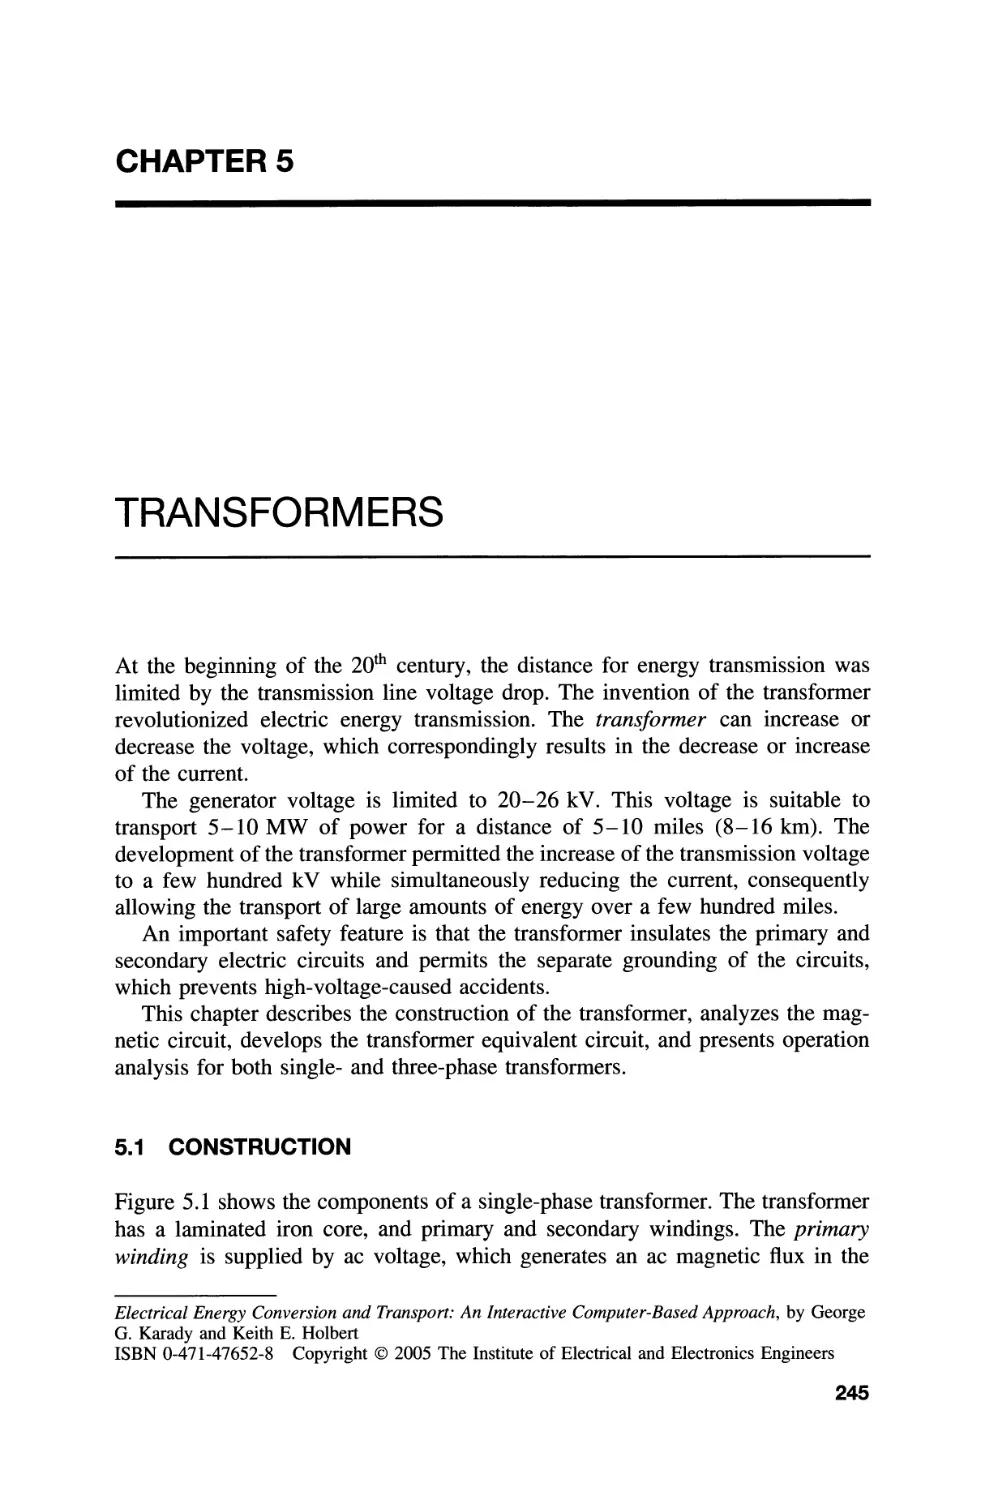 5 TRANSFORMERS